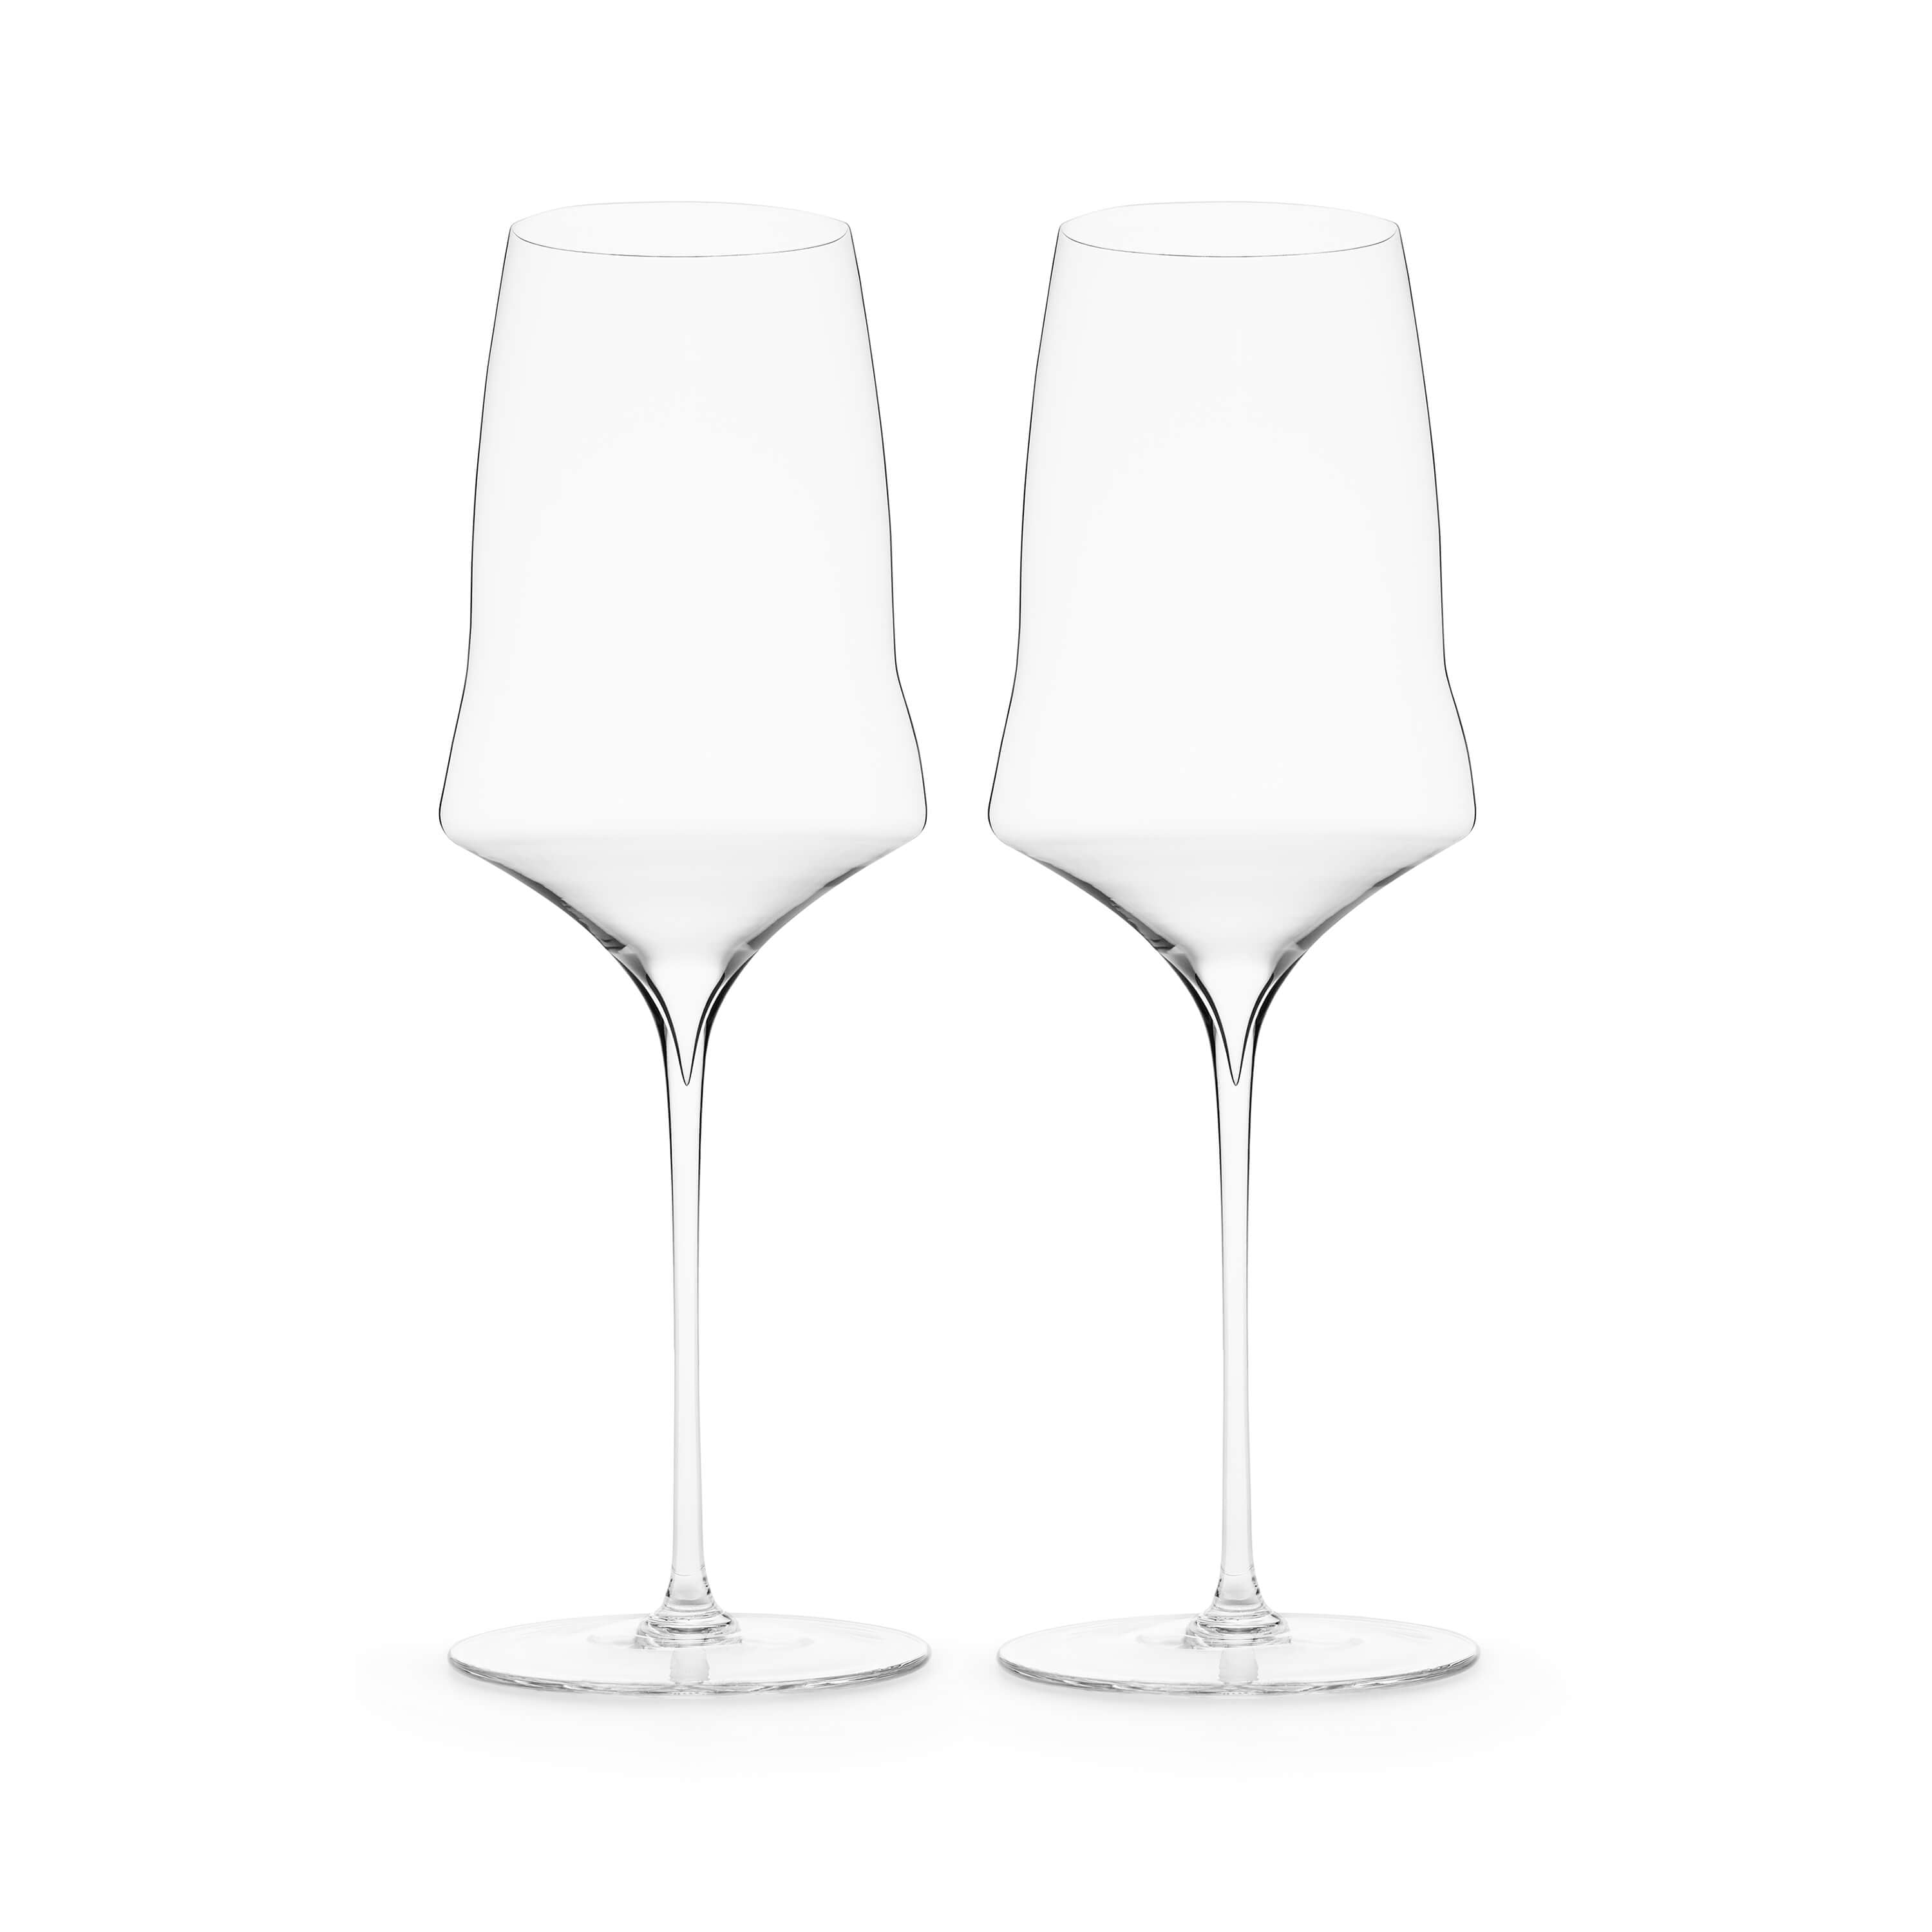 JOSEPHINE No 1 by Josephinenhütte – White wine glasses #Set of 2 glasses_JOSEPHINE No 1 – White